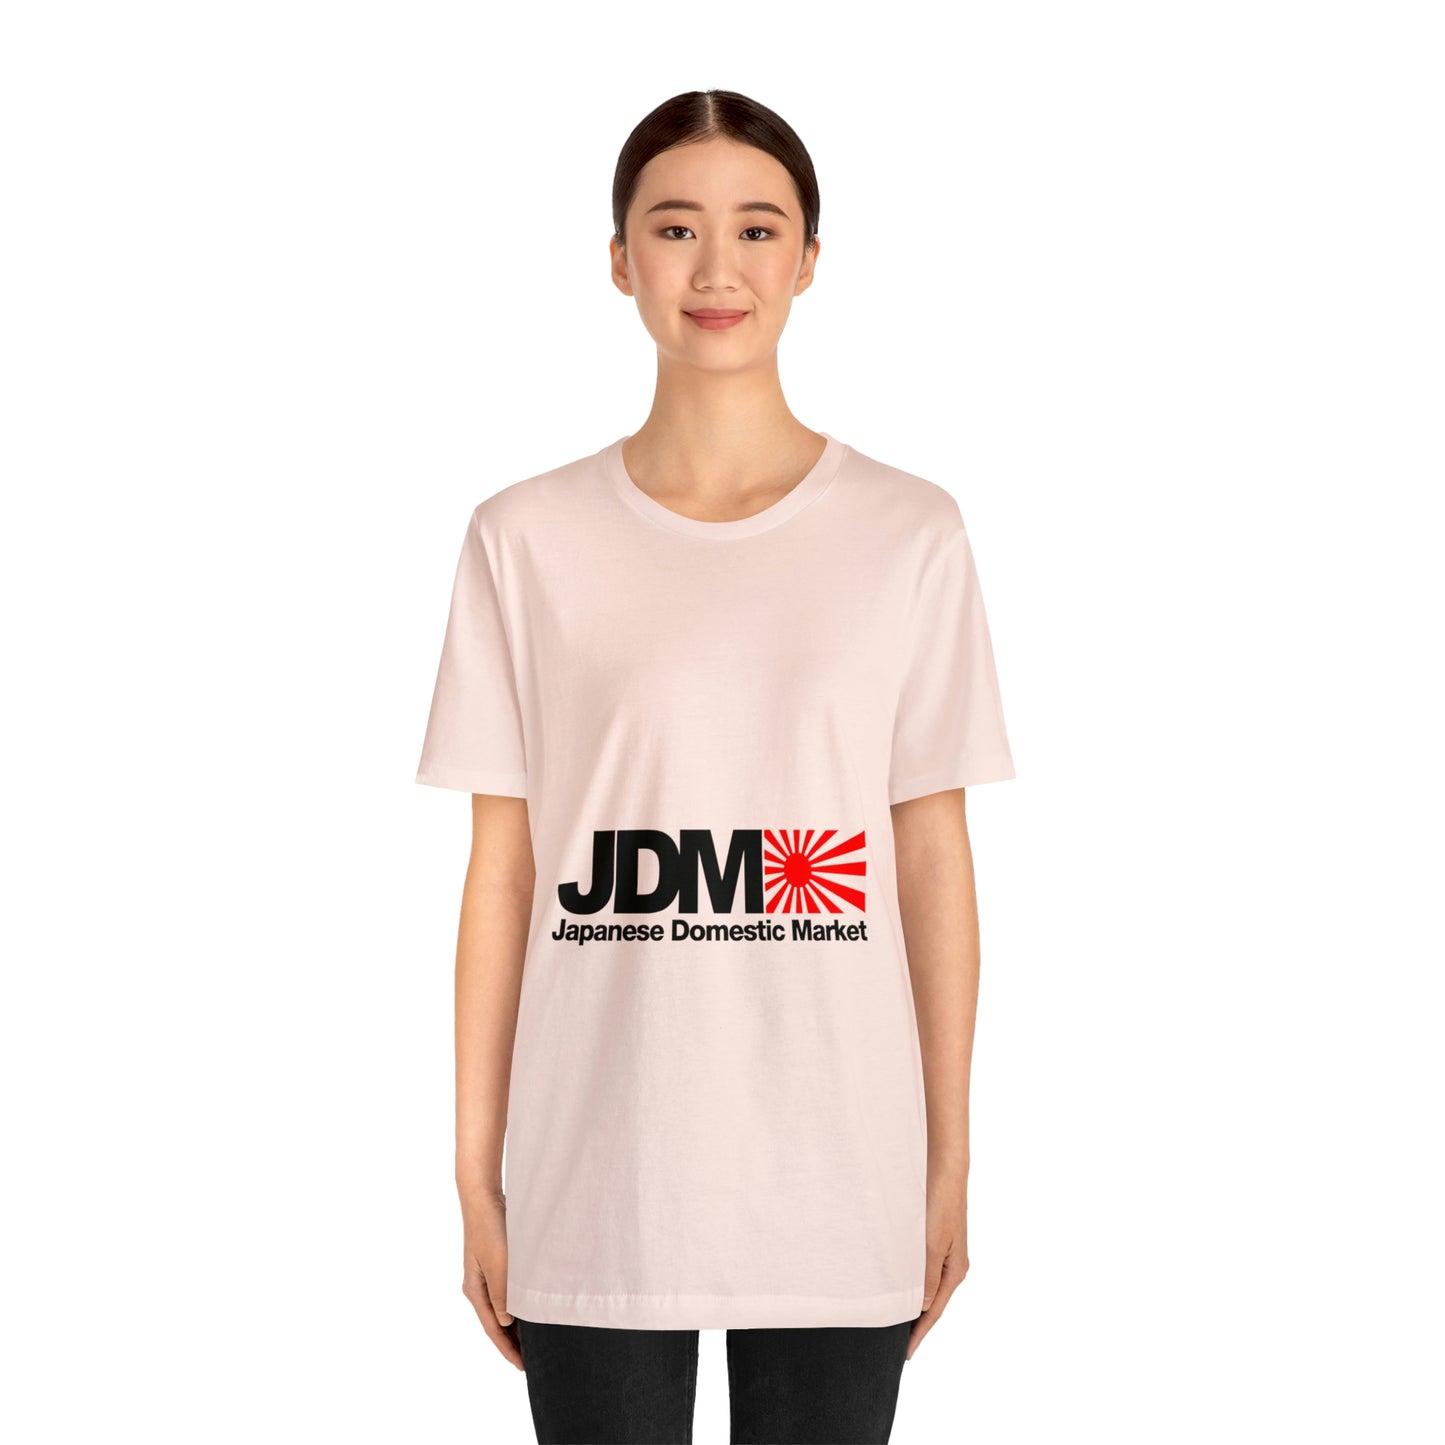 JDM Car Inspired T Shirt 59.